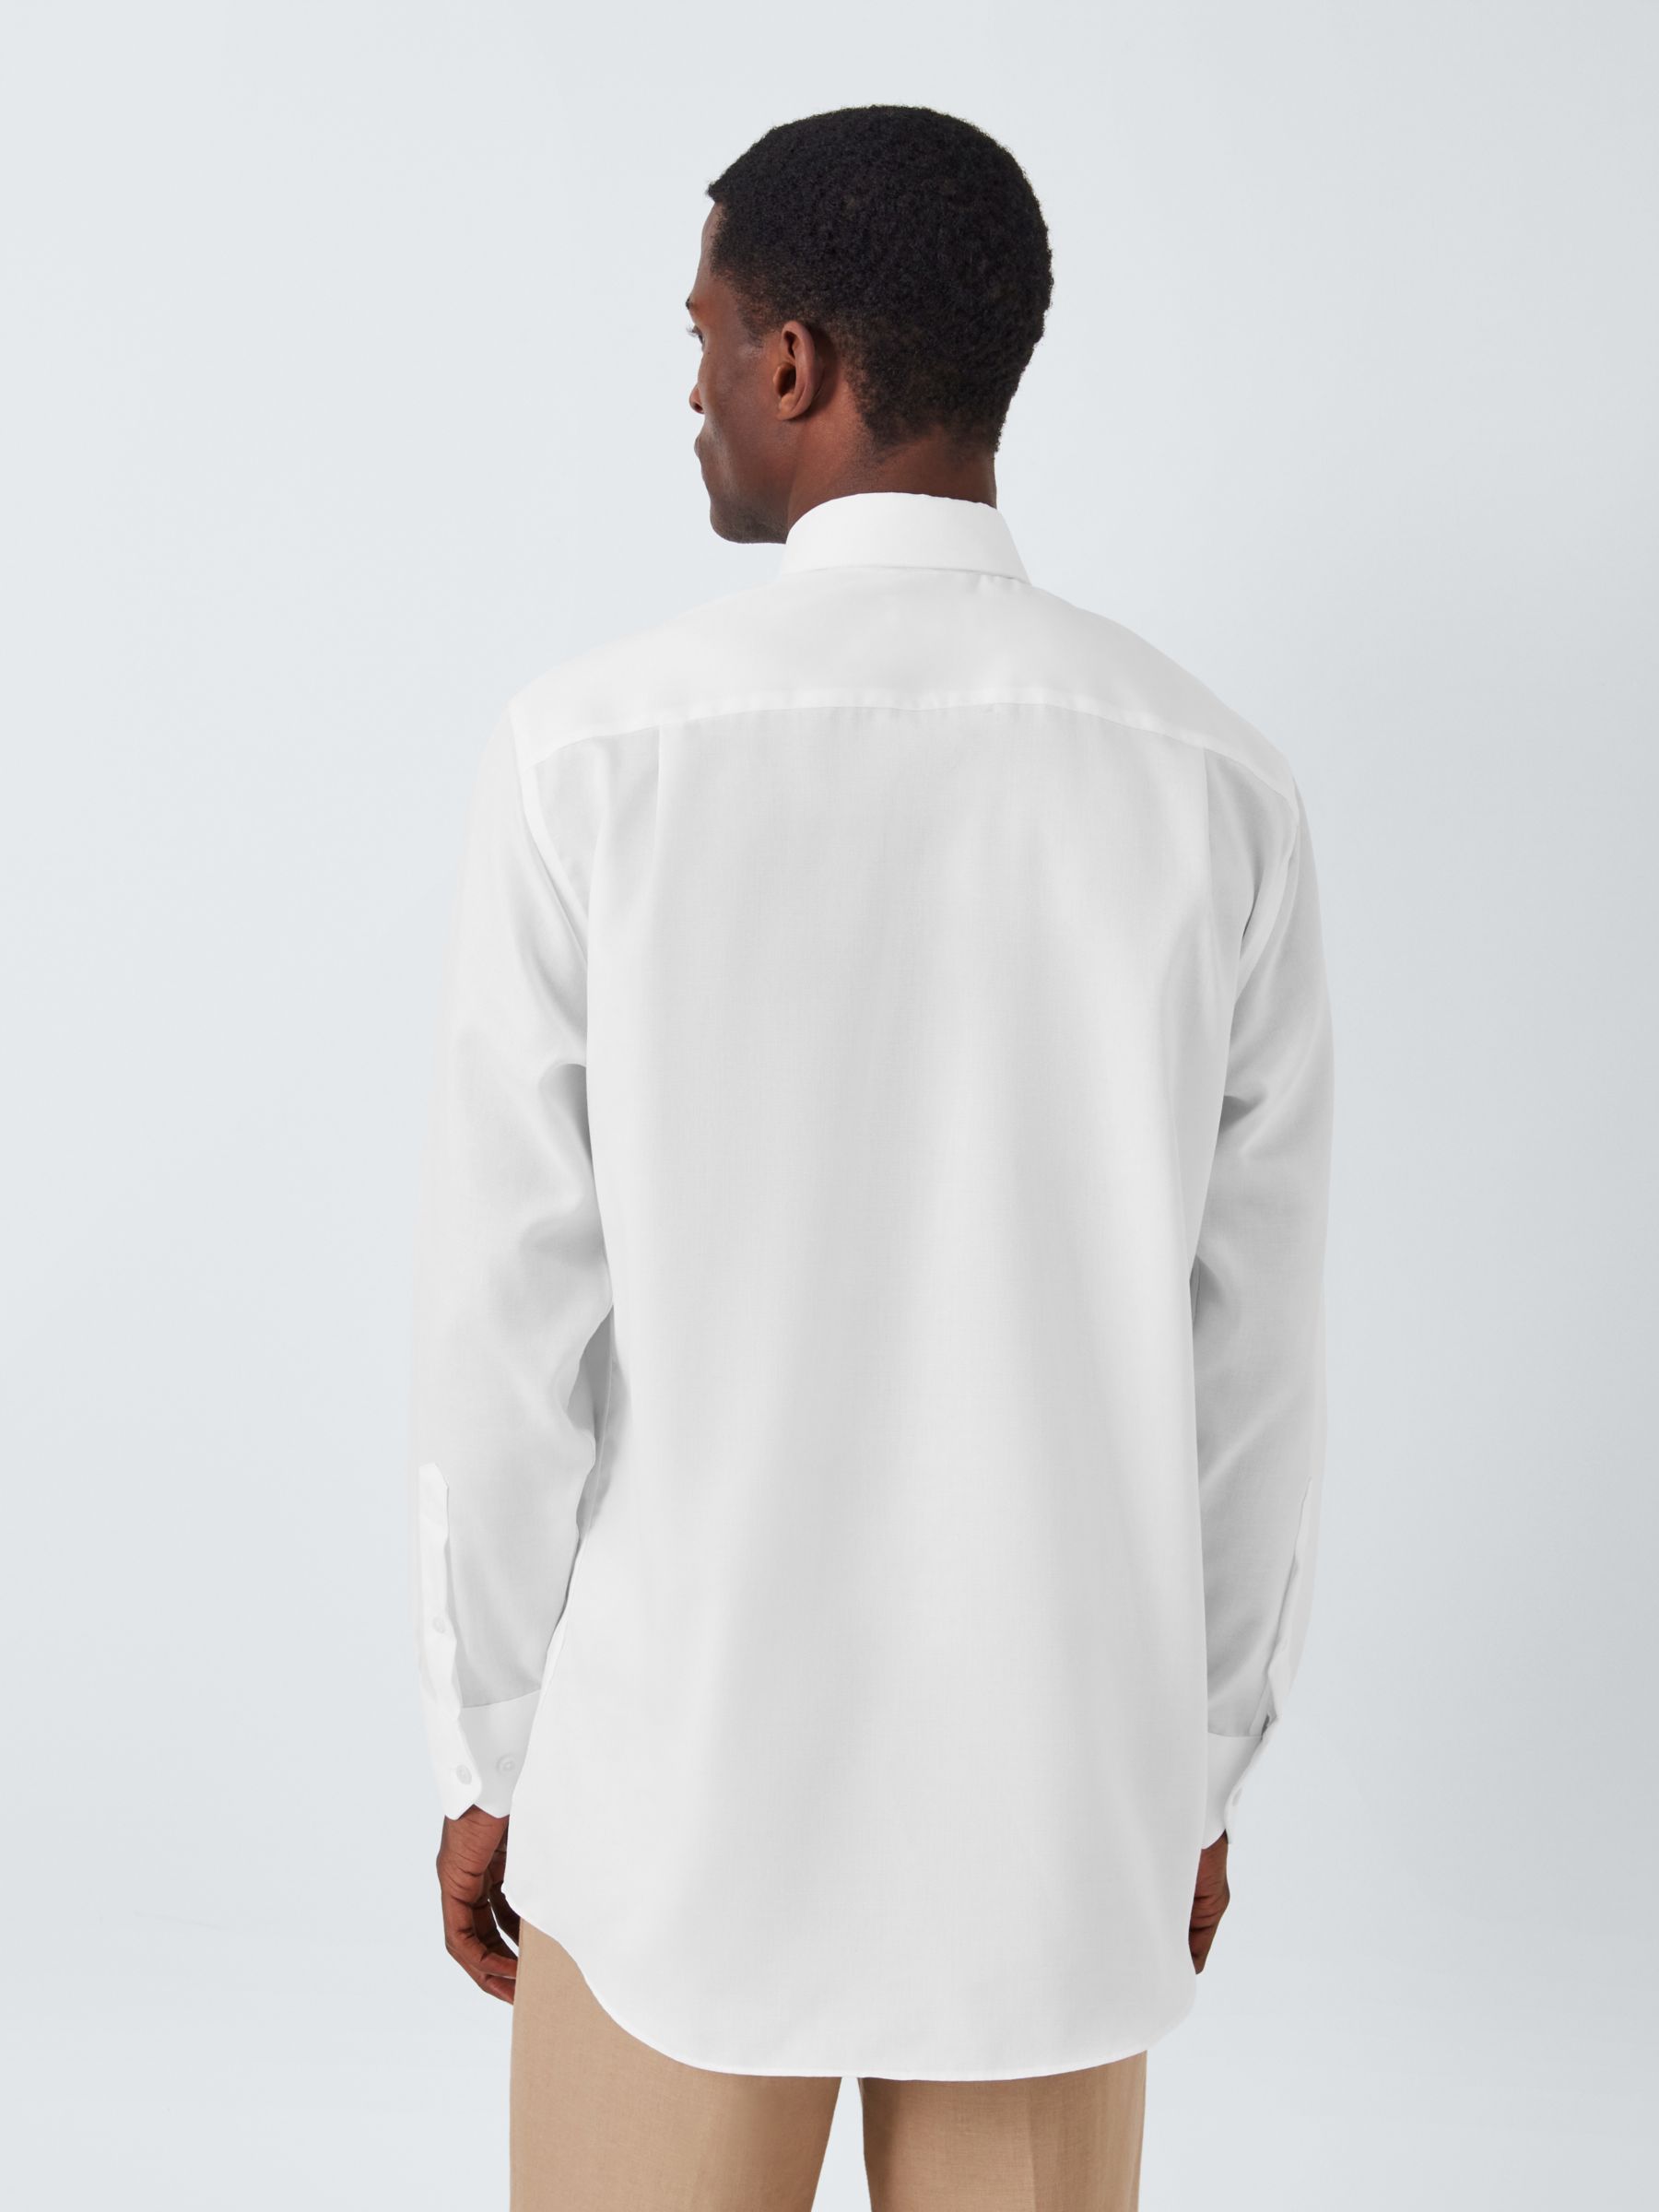 John Lewis Dobby Regular Fit Shirt, White, 17.5R